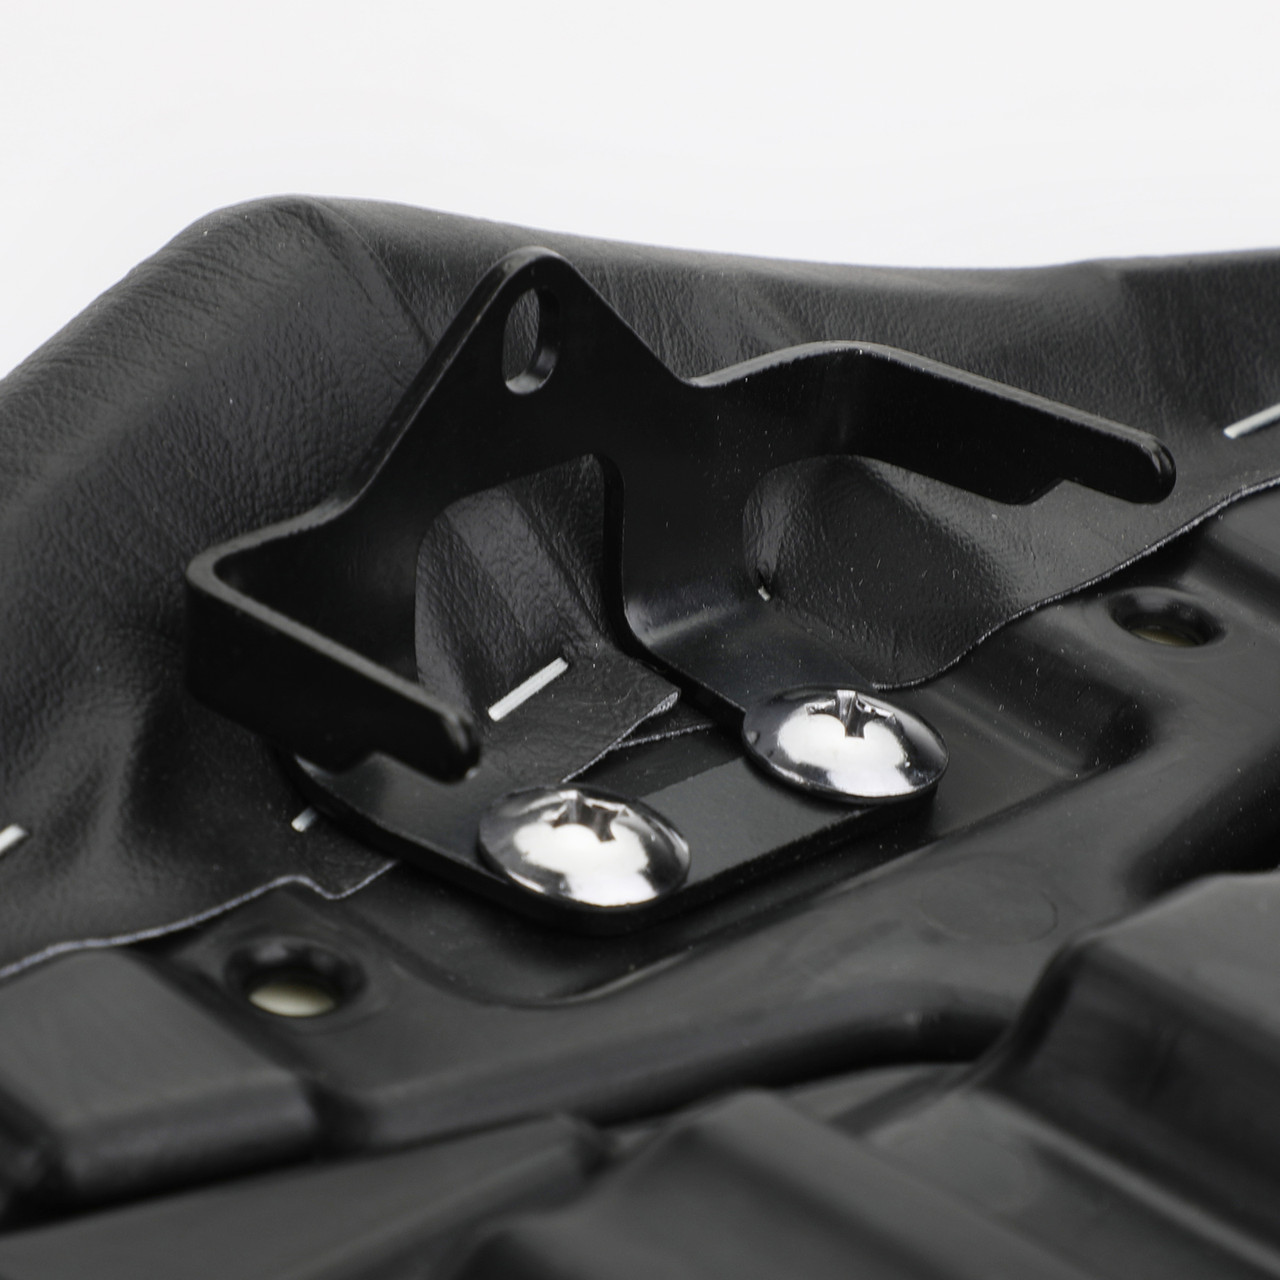 ABS Plastic Rear Pillion Seat Cowl Fairing Cover For Triumph Daytona 675 06-12 Carbon